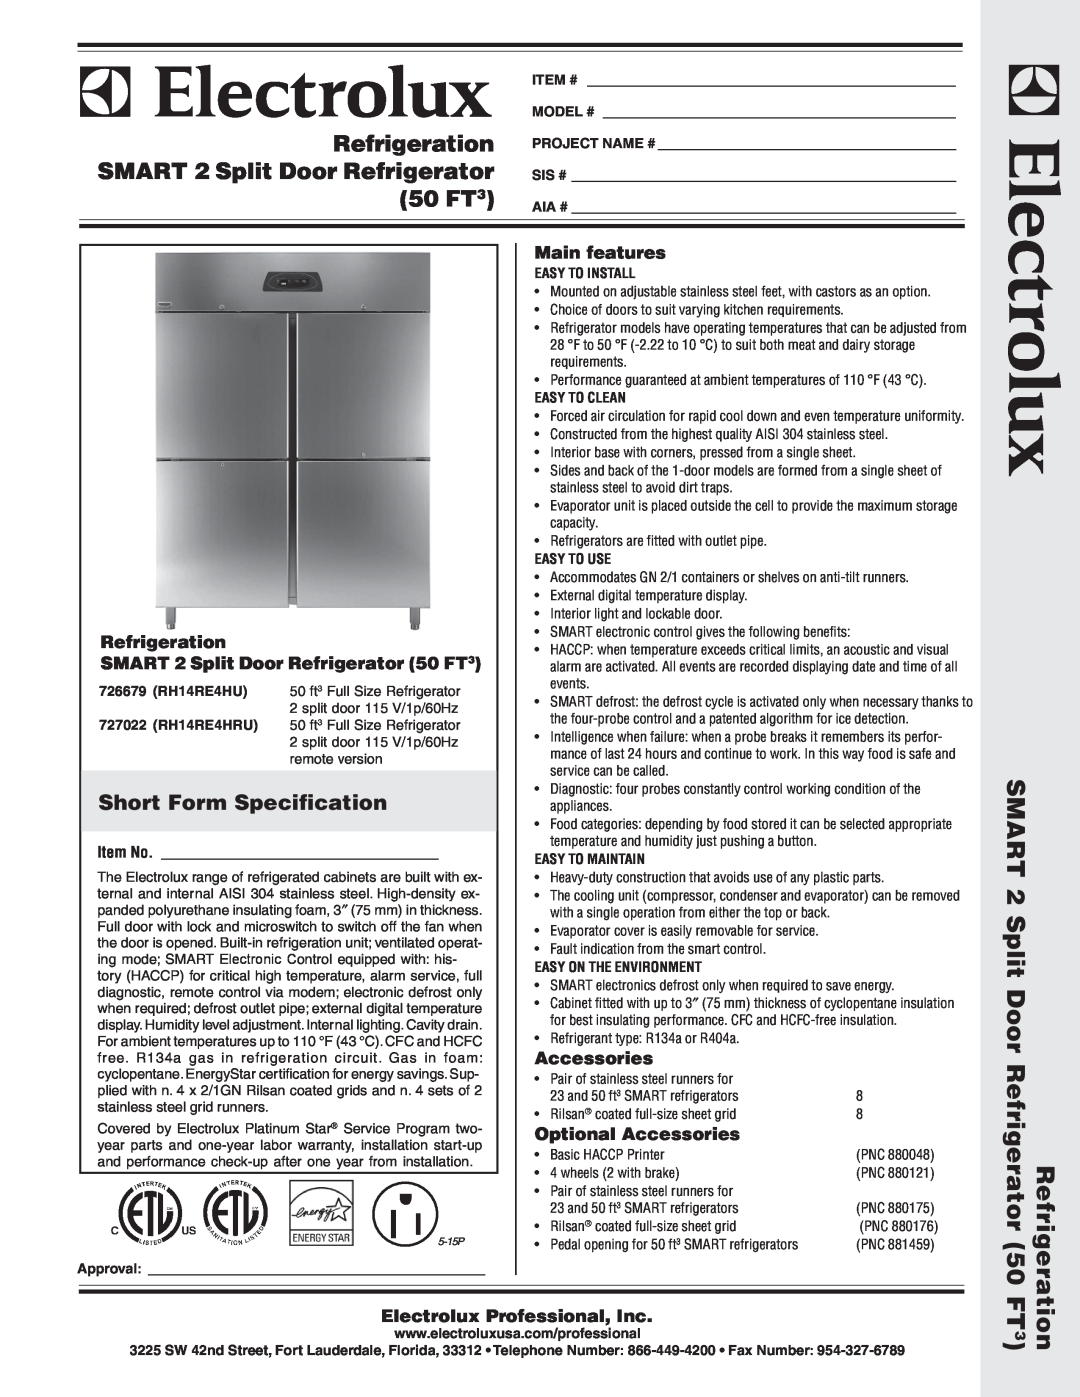 Electrolux 727022 warranty Short Form Specification, Main features, Refrigeration, SMART 2 Split Door Refrigerator 50 FT3 